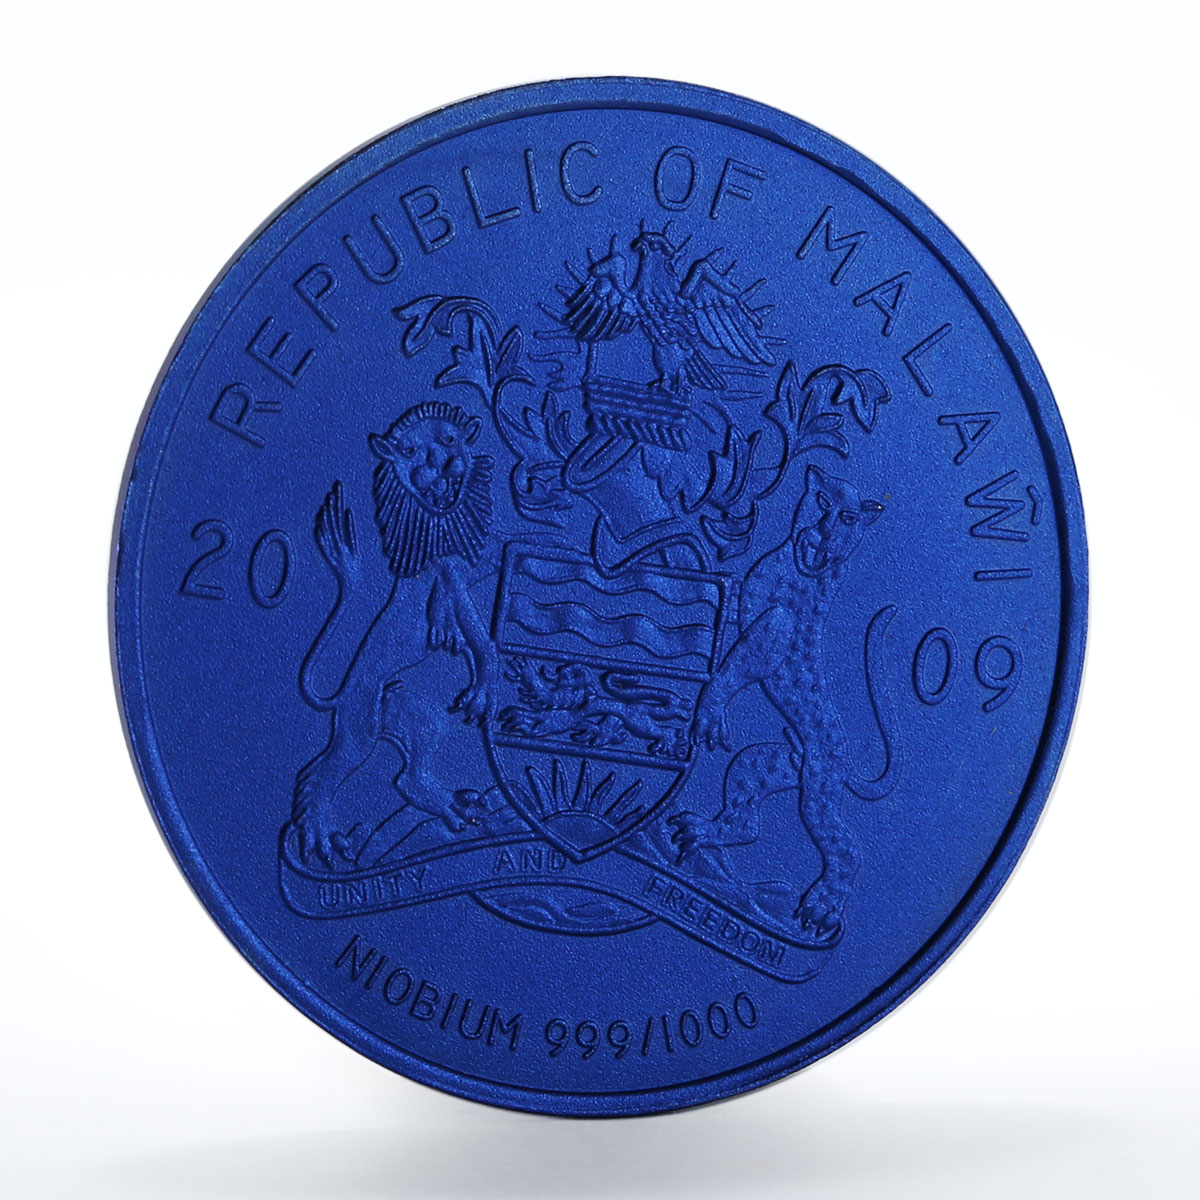 Malawi 50 kwacha Milestones in Space Travel Columbia niobium coin 2009